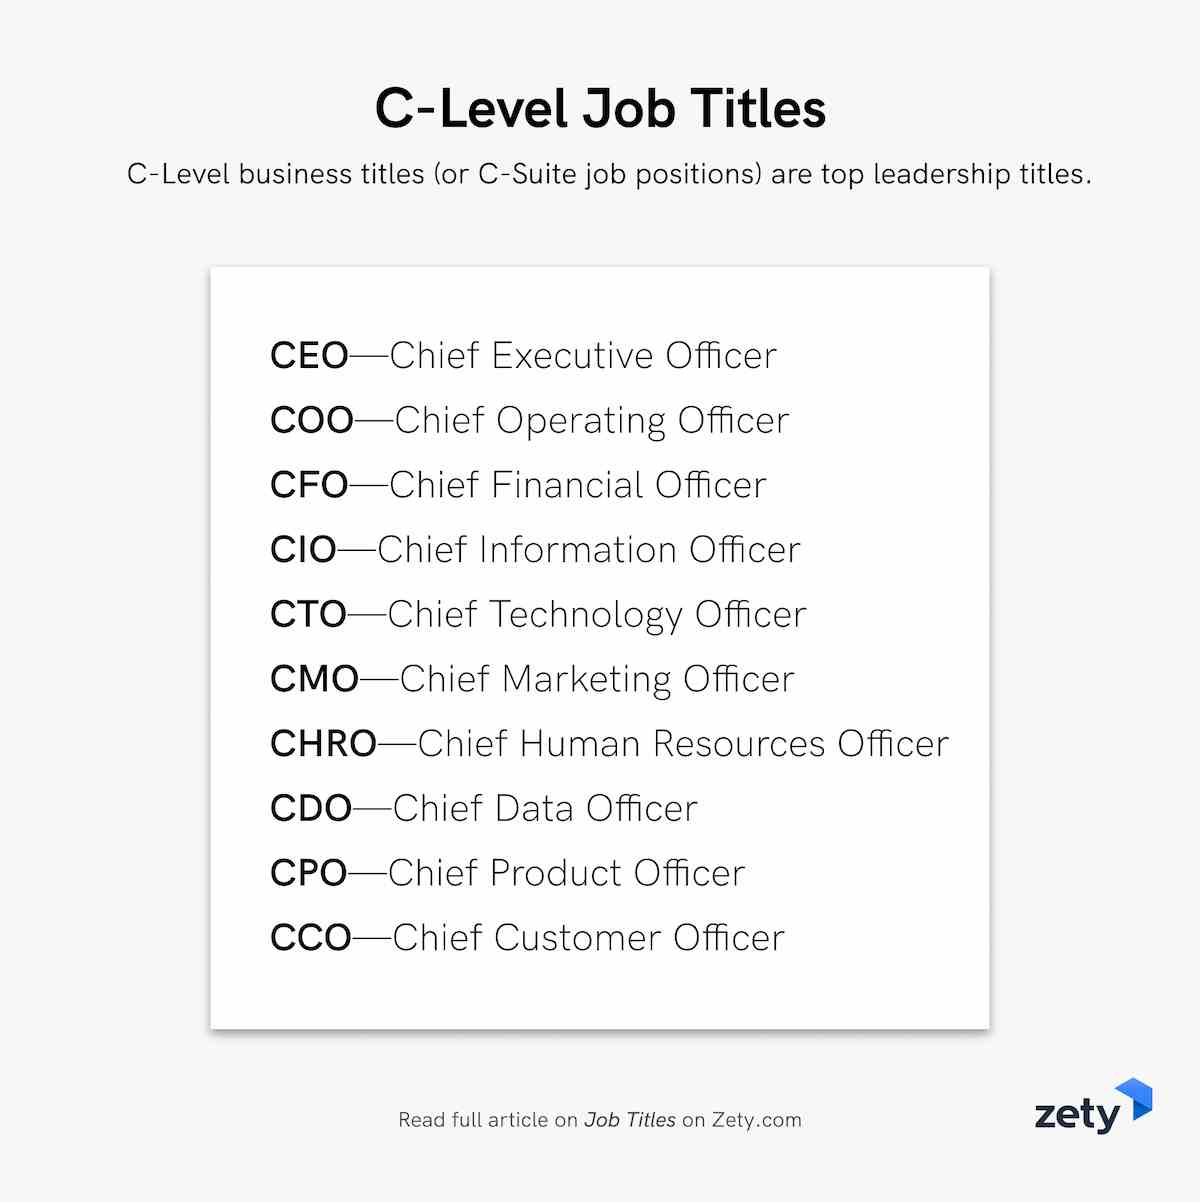 C-Level Job Titles